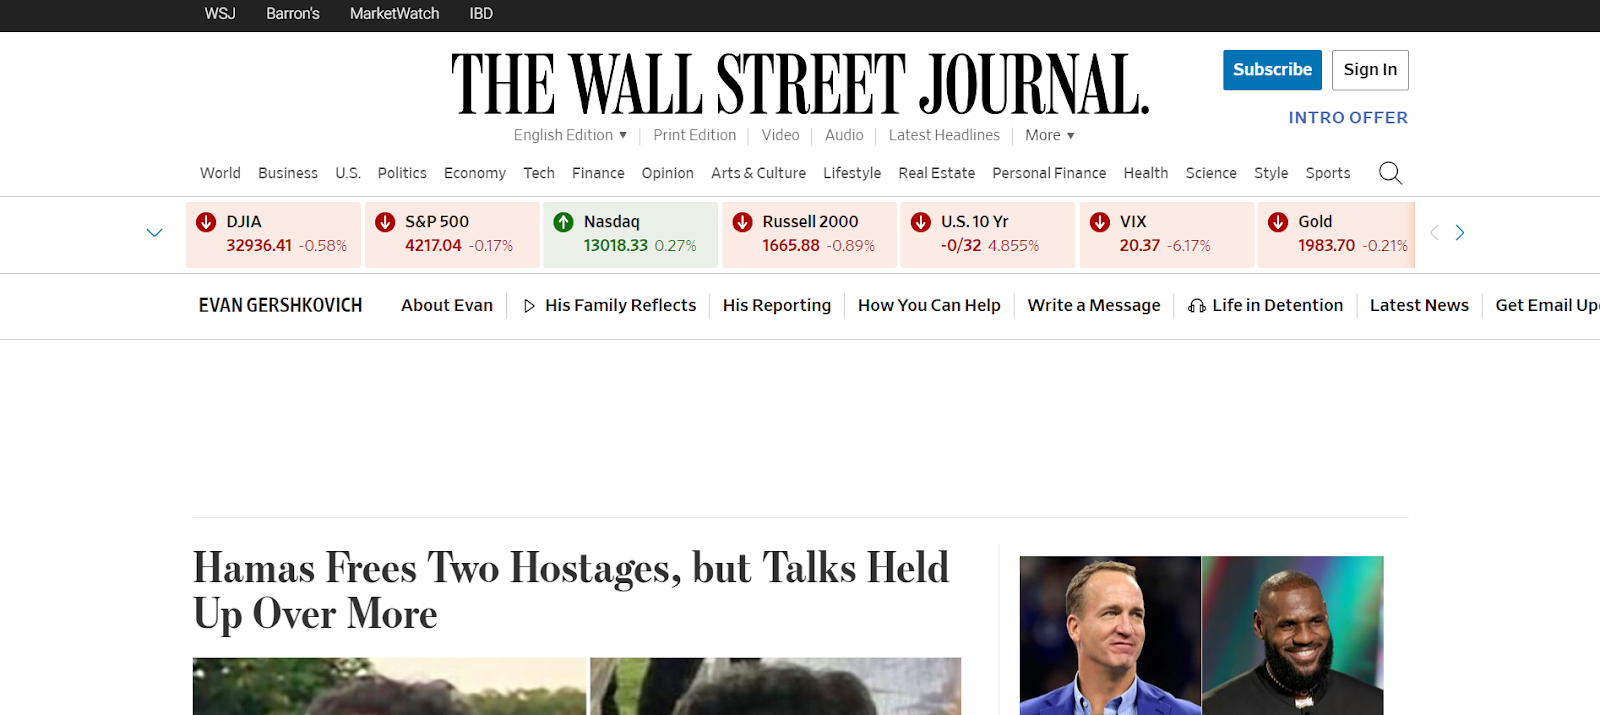 9. The Wall Street Journal